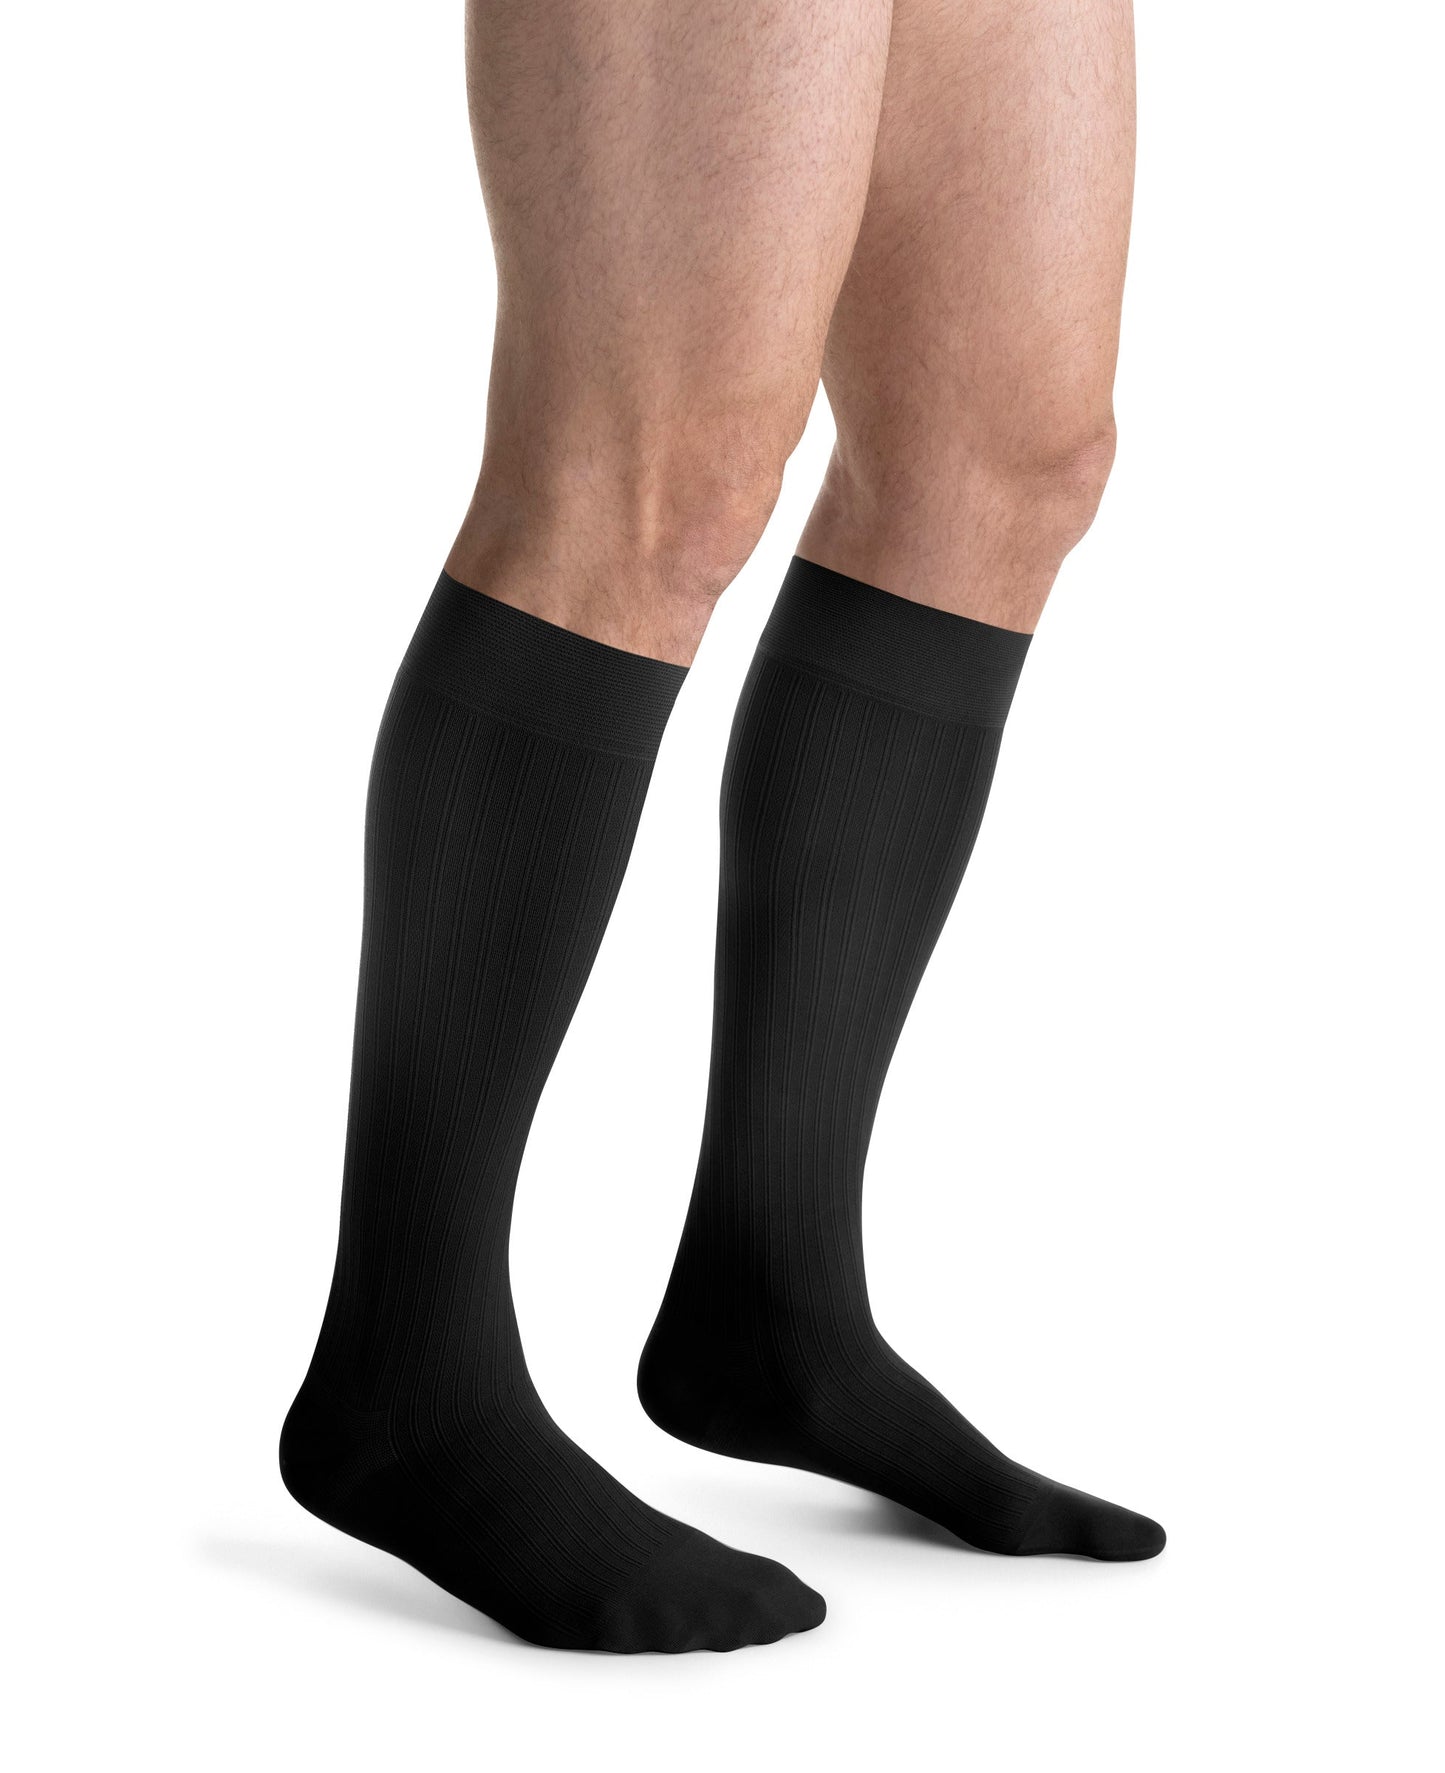 JOBST forMen Ambition Compression Socks 20-30 mmHg Knee High SoftFit Closed Toe